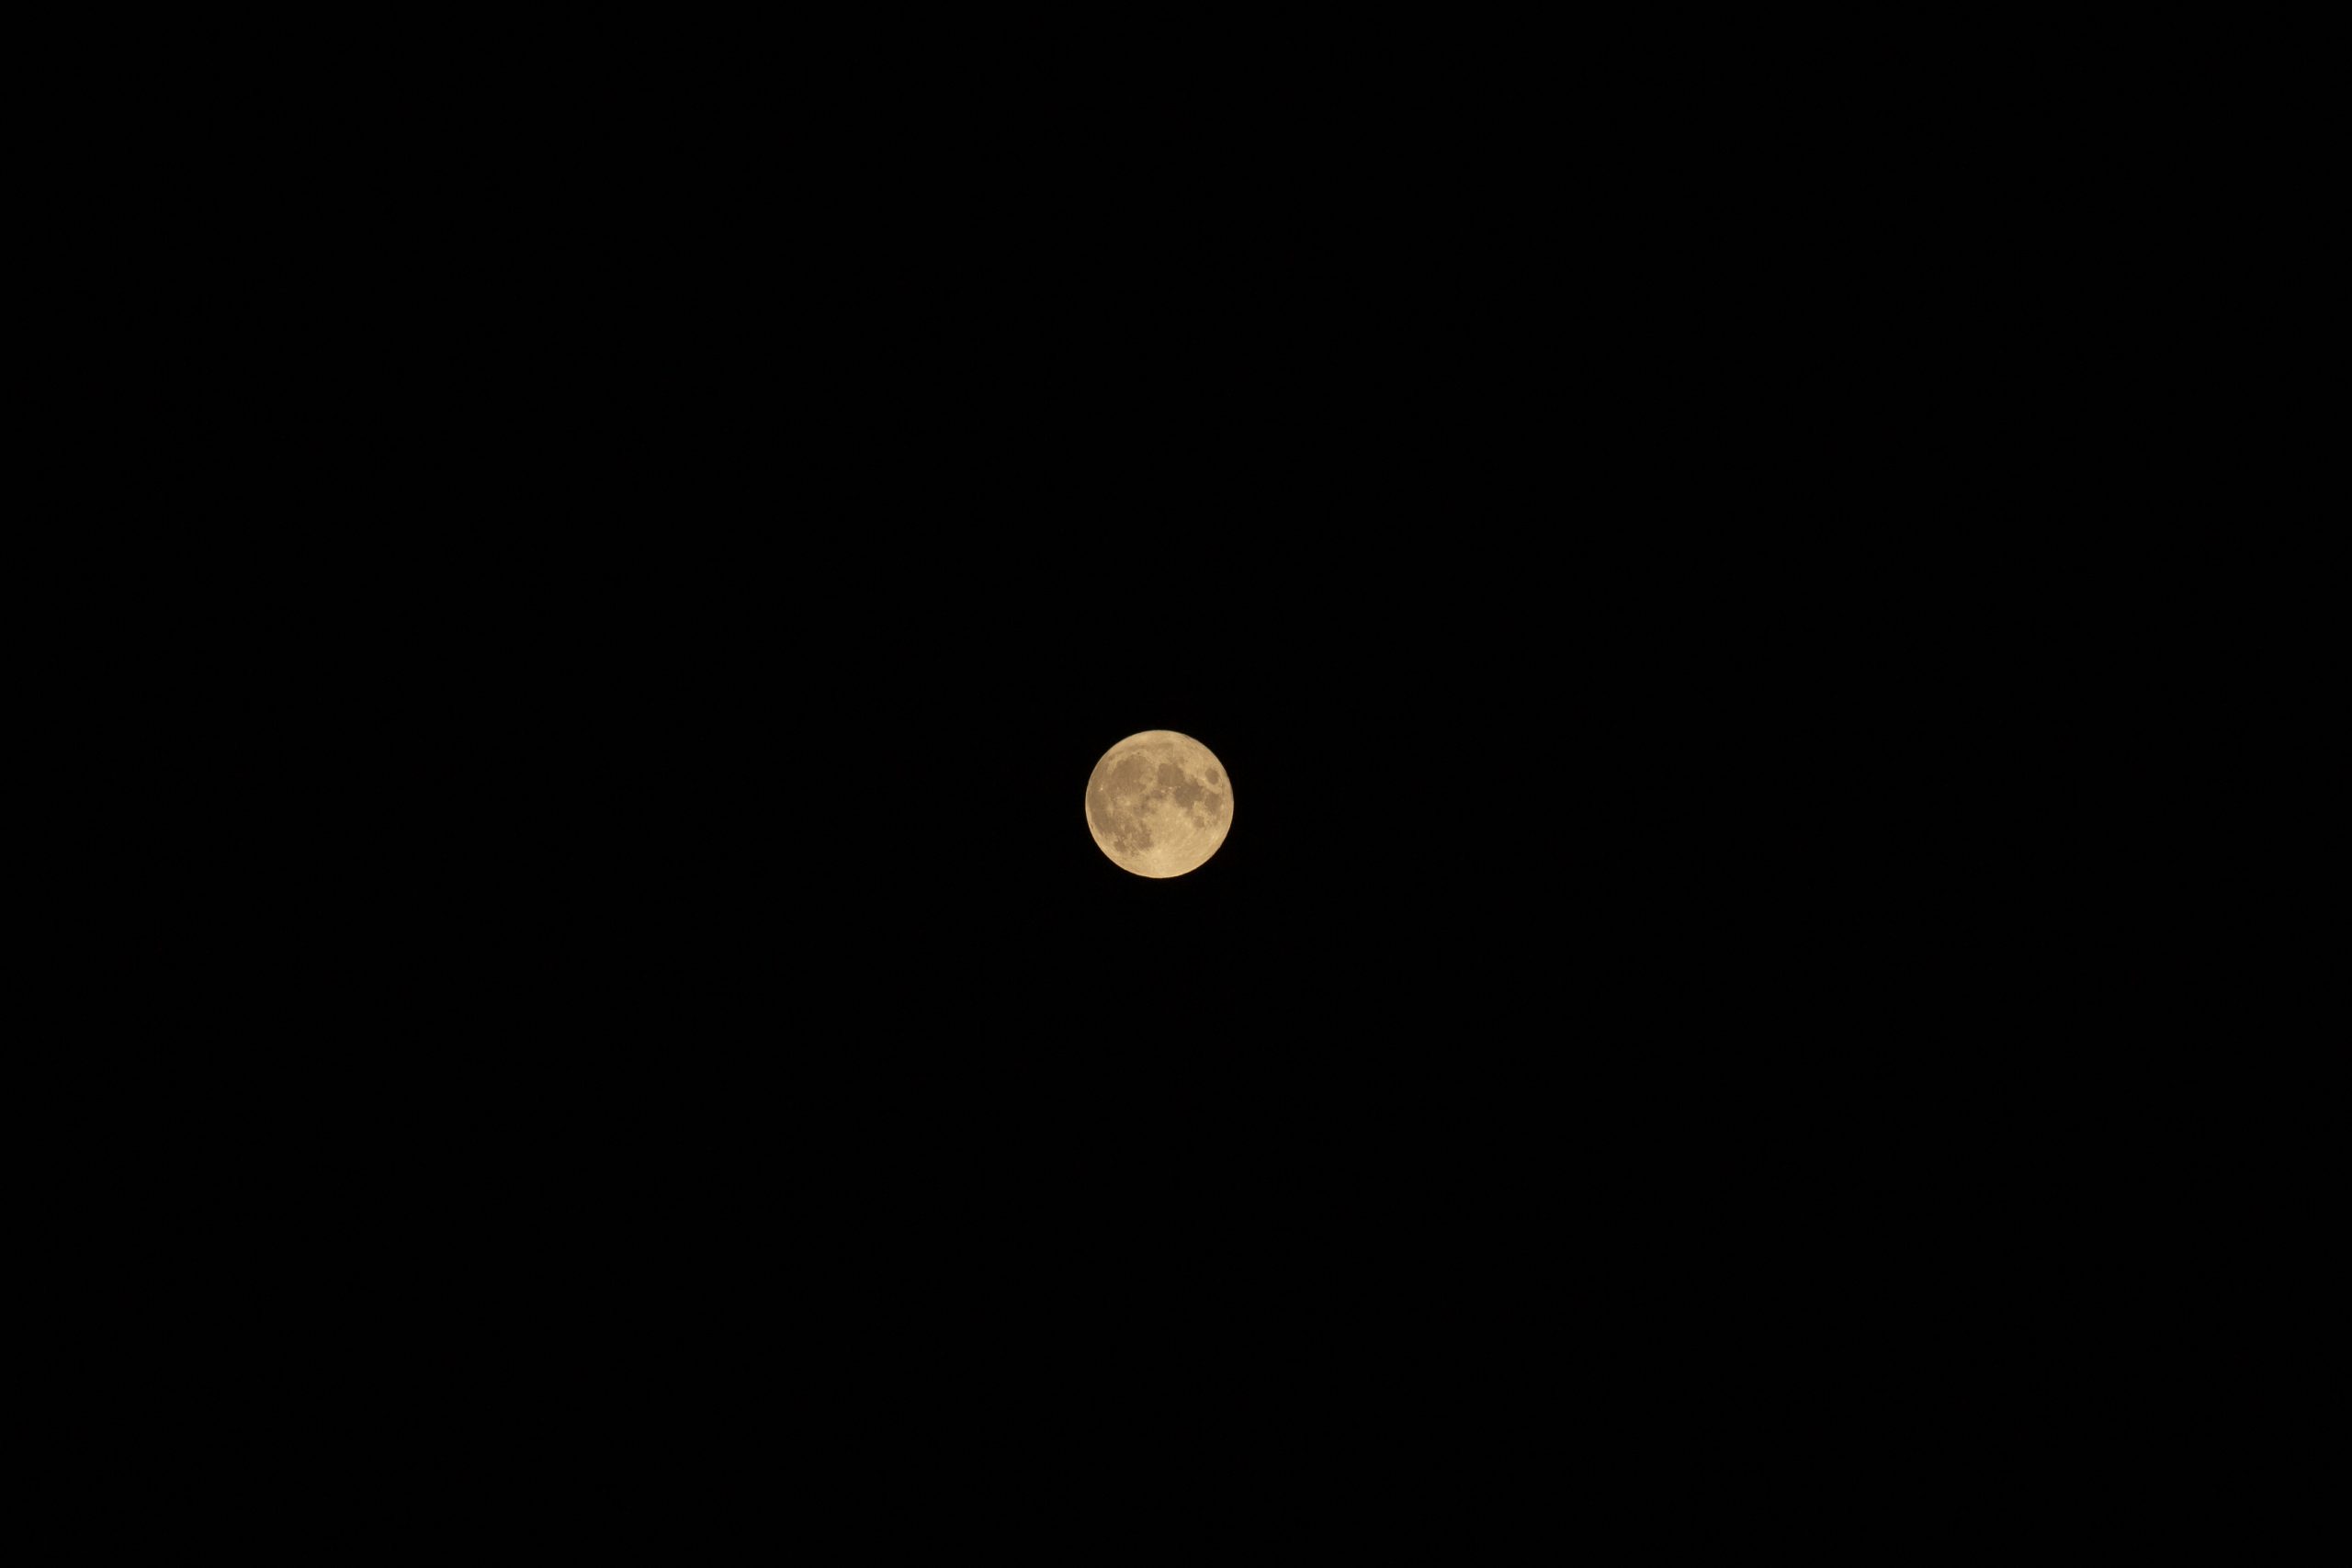 A full moon night